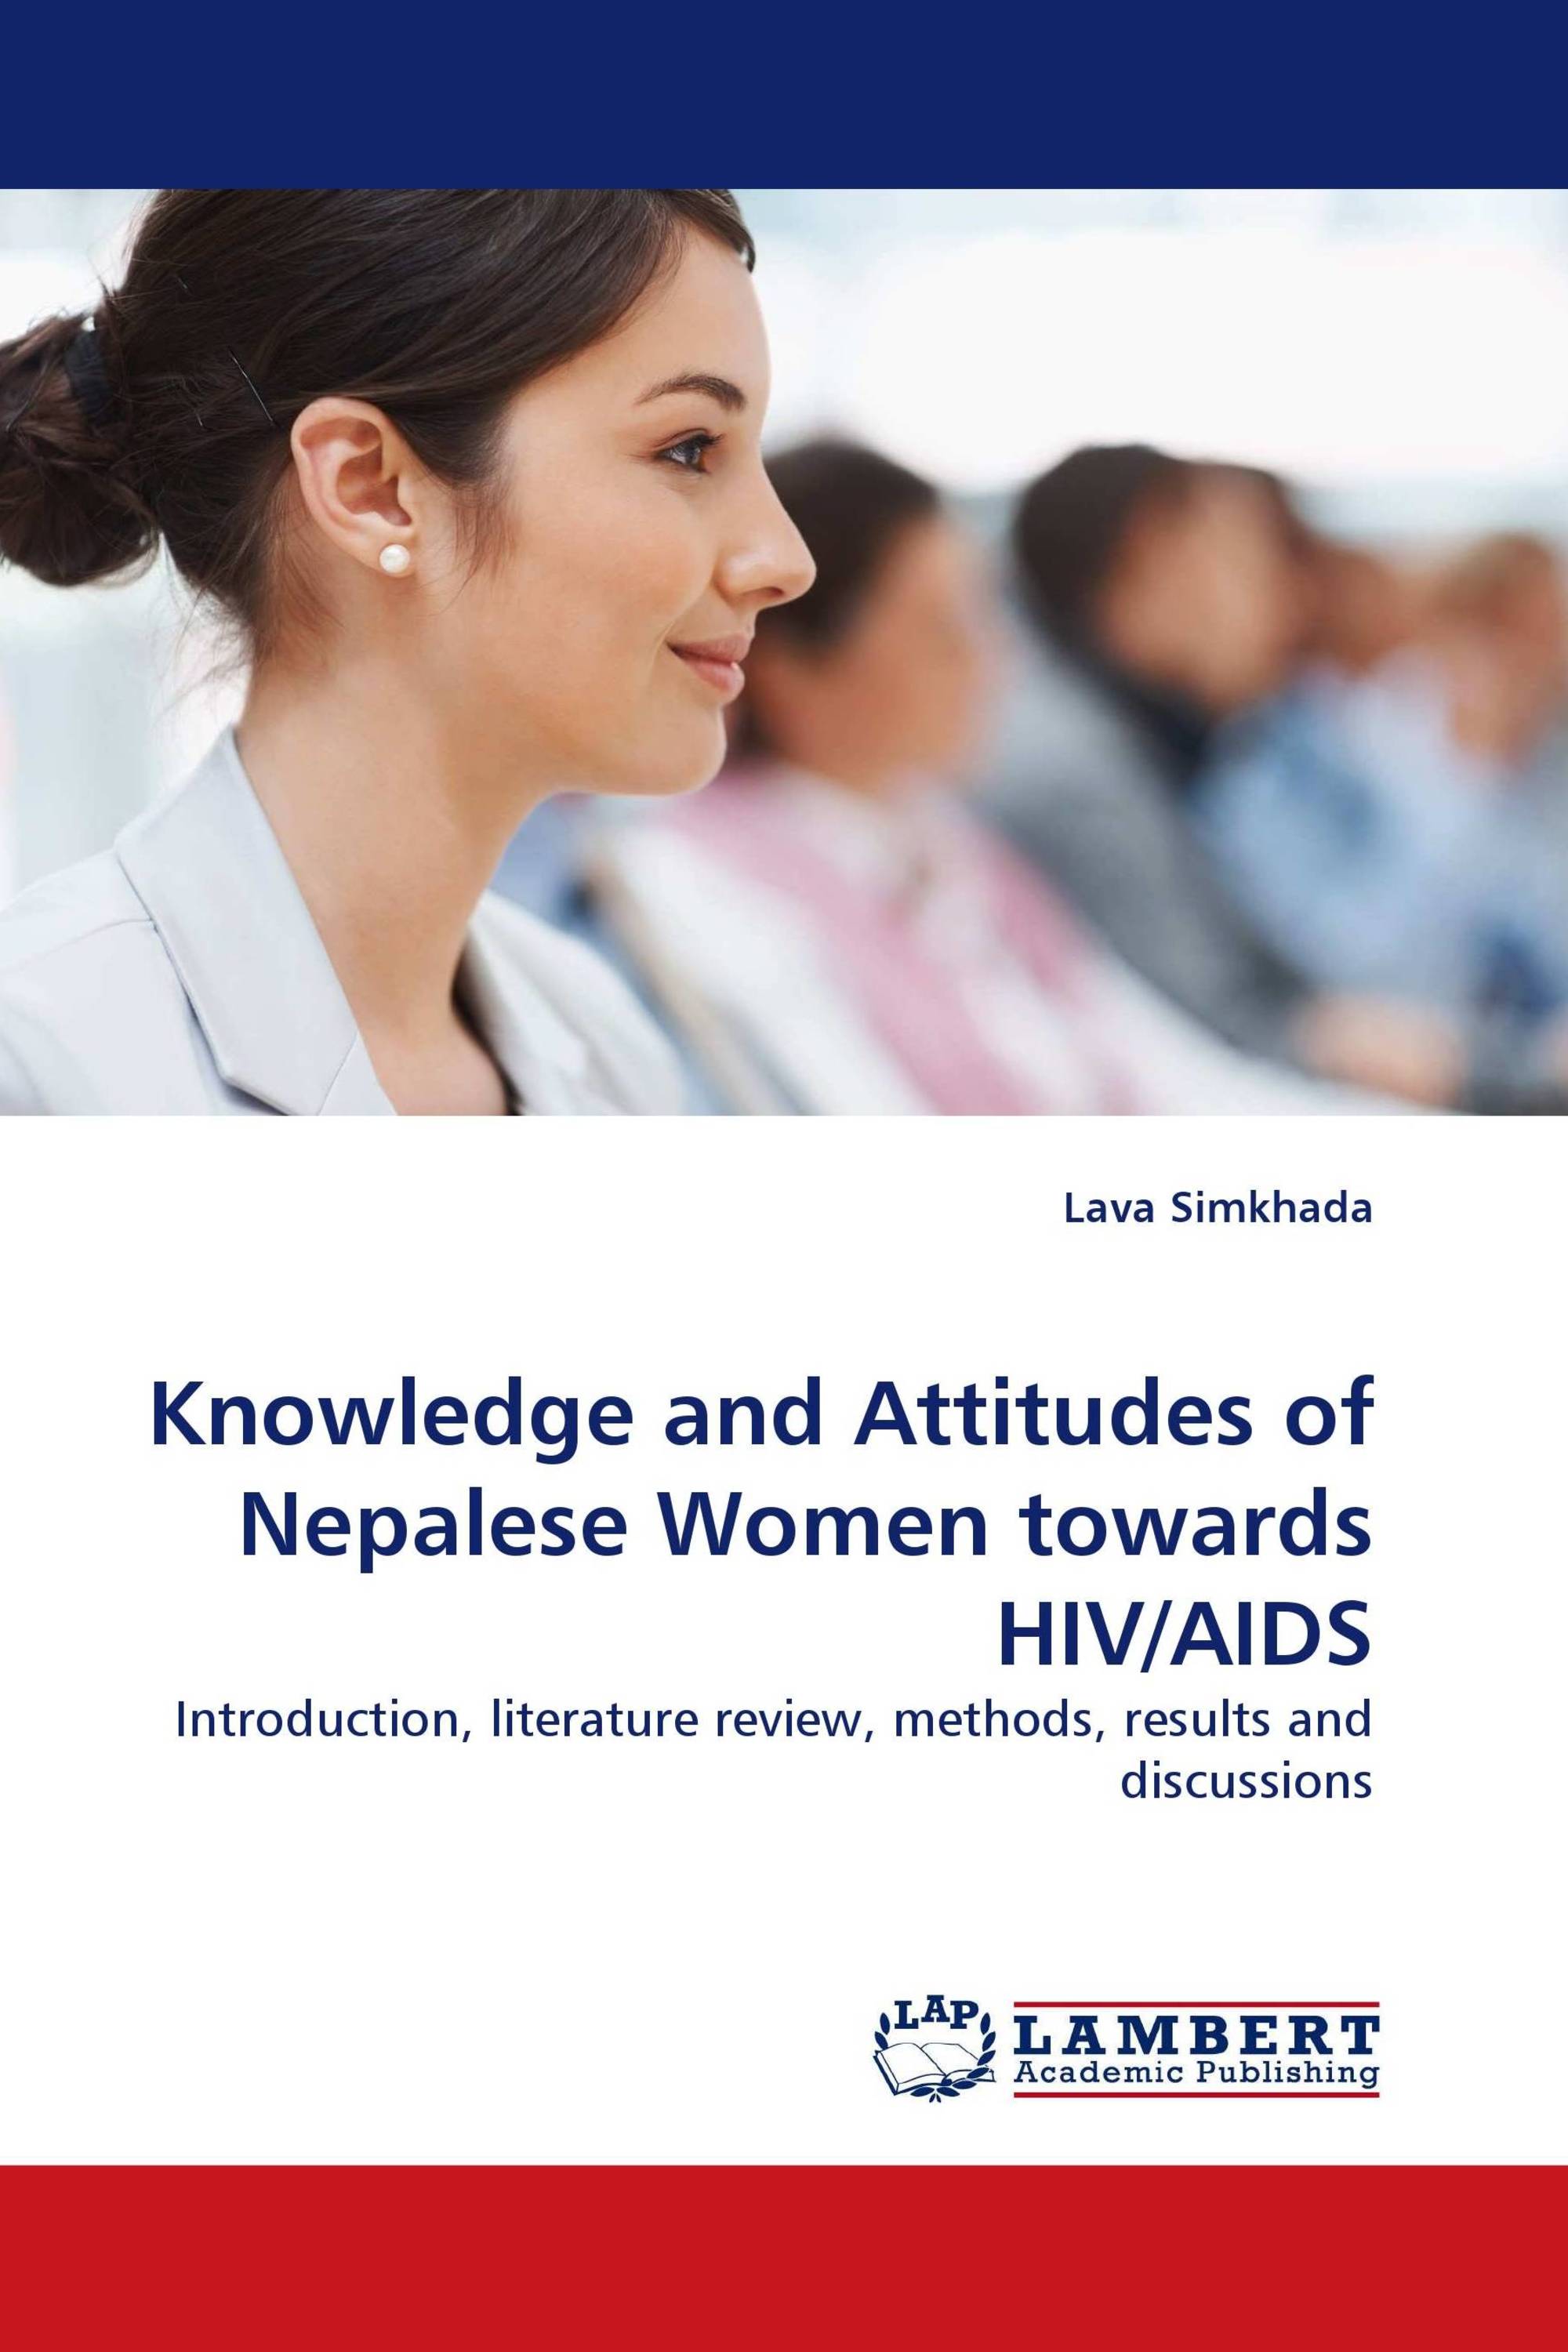 hiv aids essay in nepali language